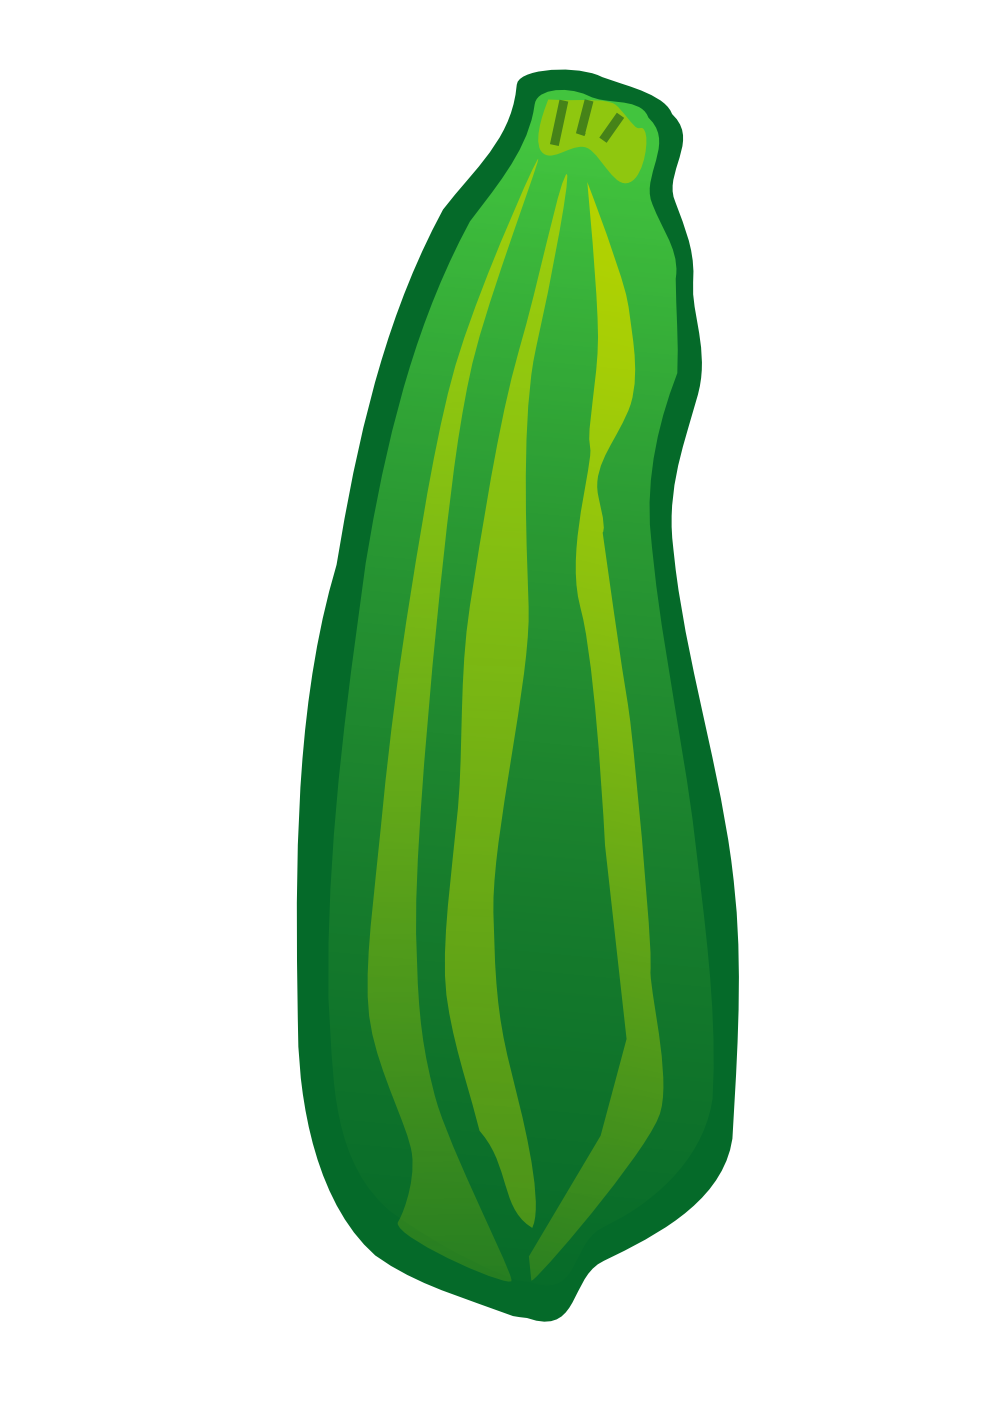 Cucumber clipart Vegetable clip art